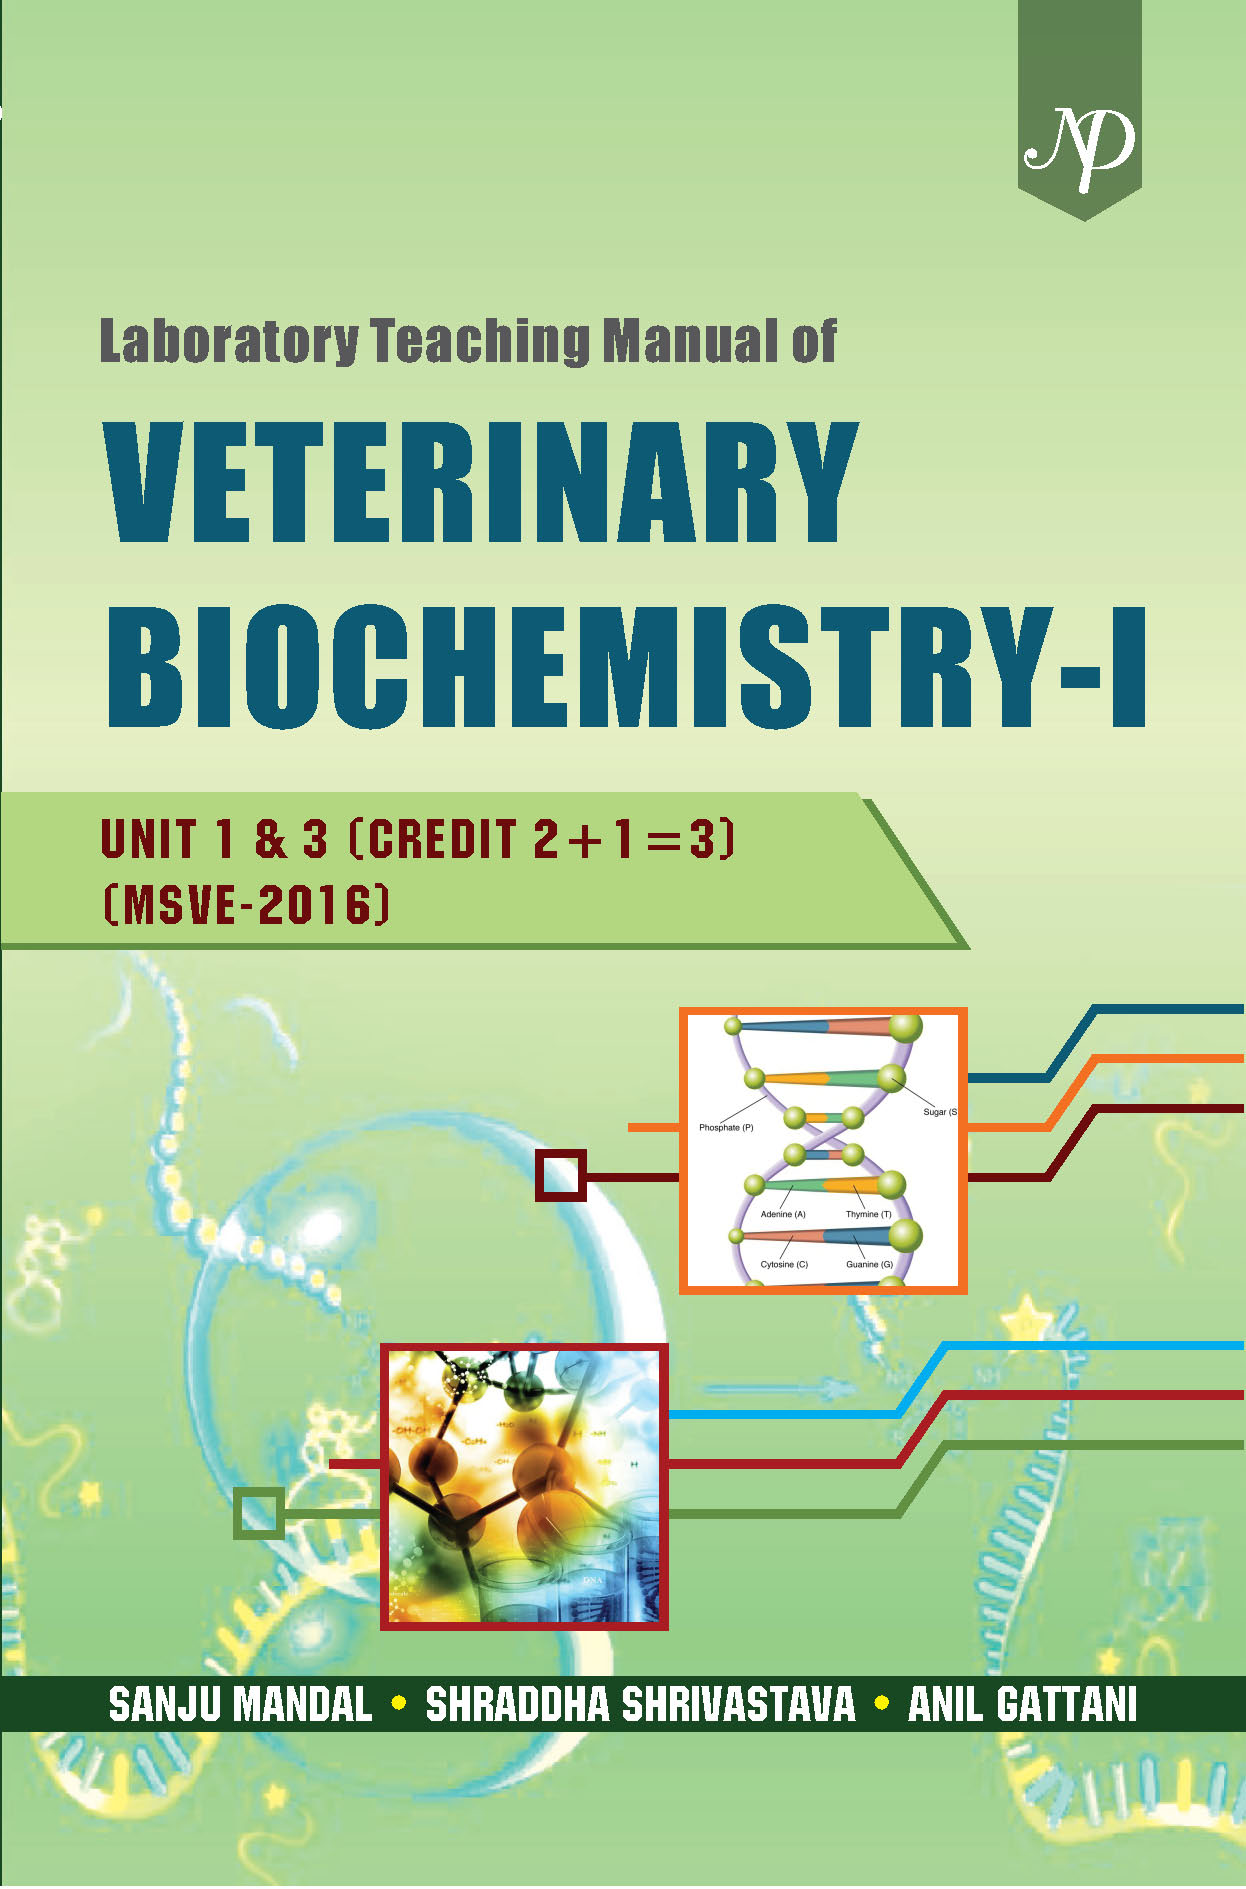 Laboratory Manual of Veterinary Biochemistry (I) Cover.jpg